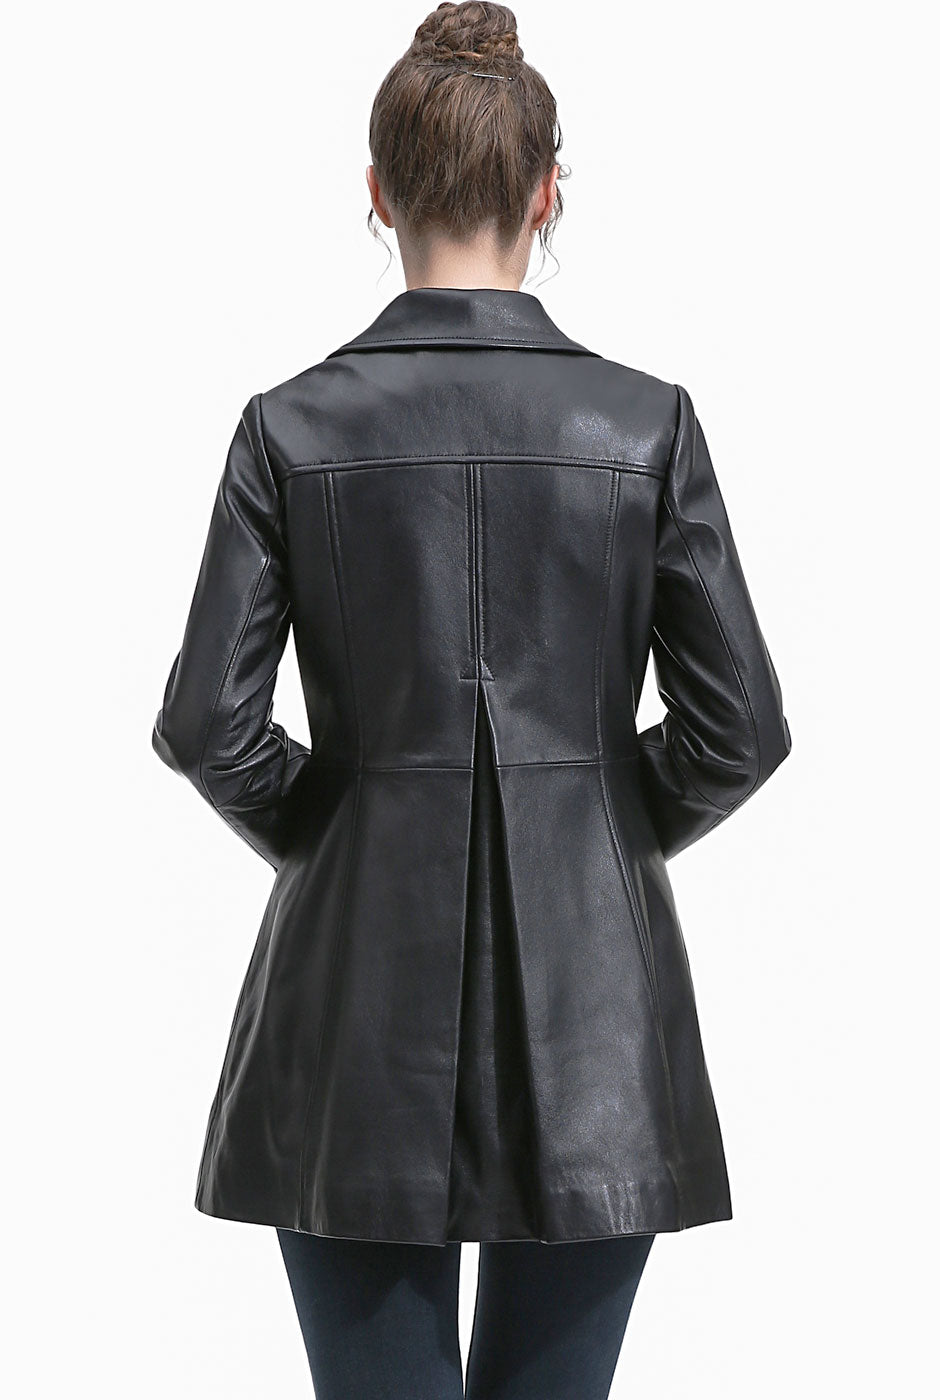 BGSD Women Belle New Zealand Lambskin Leather Coat